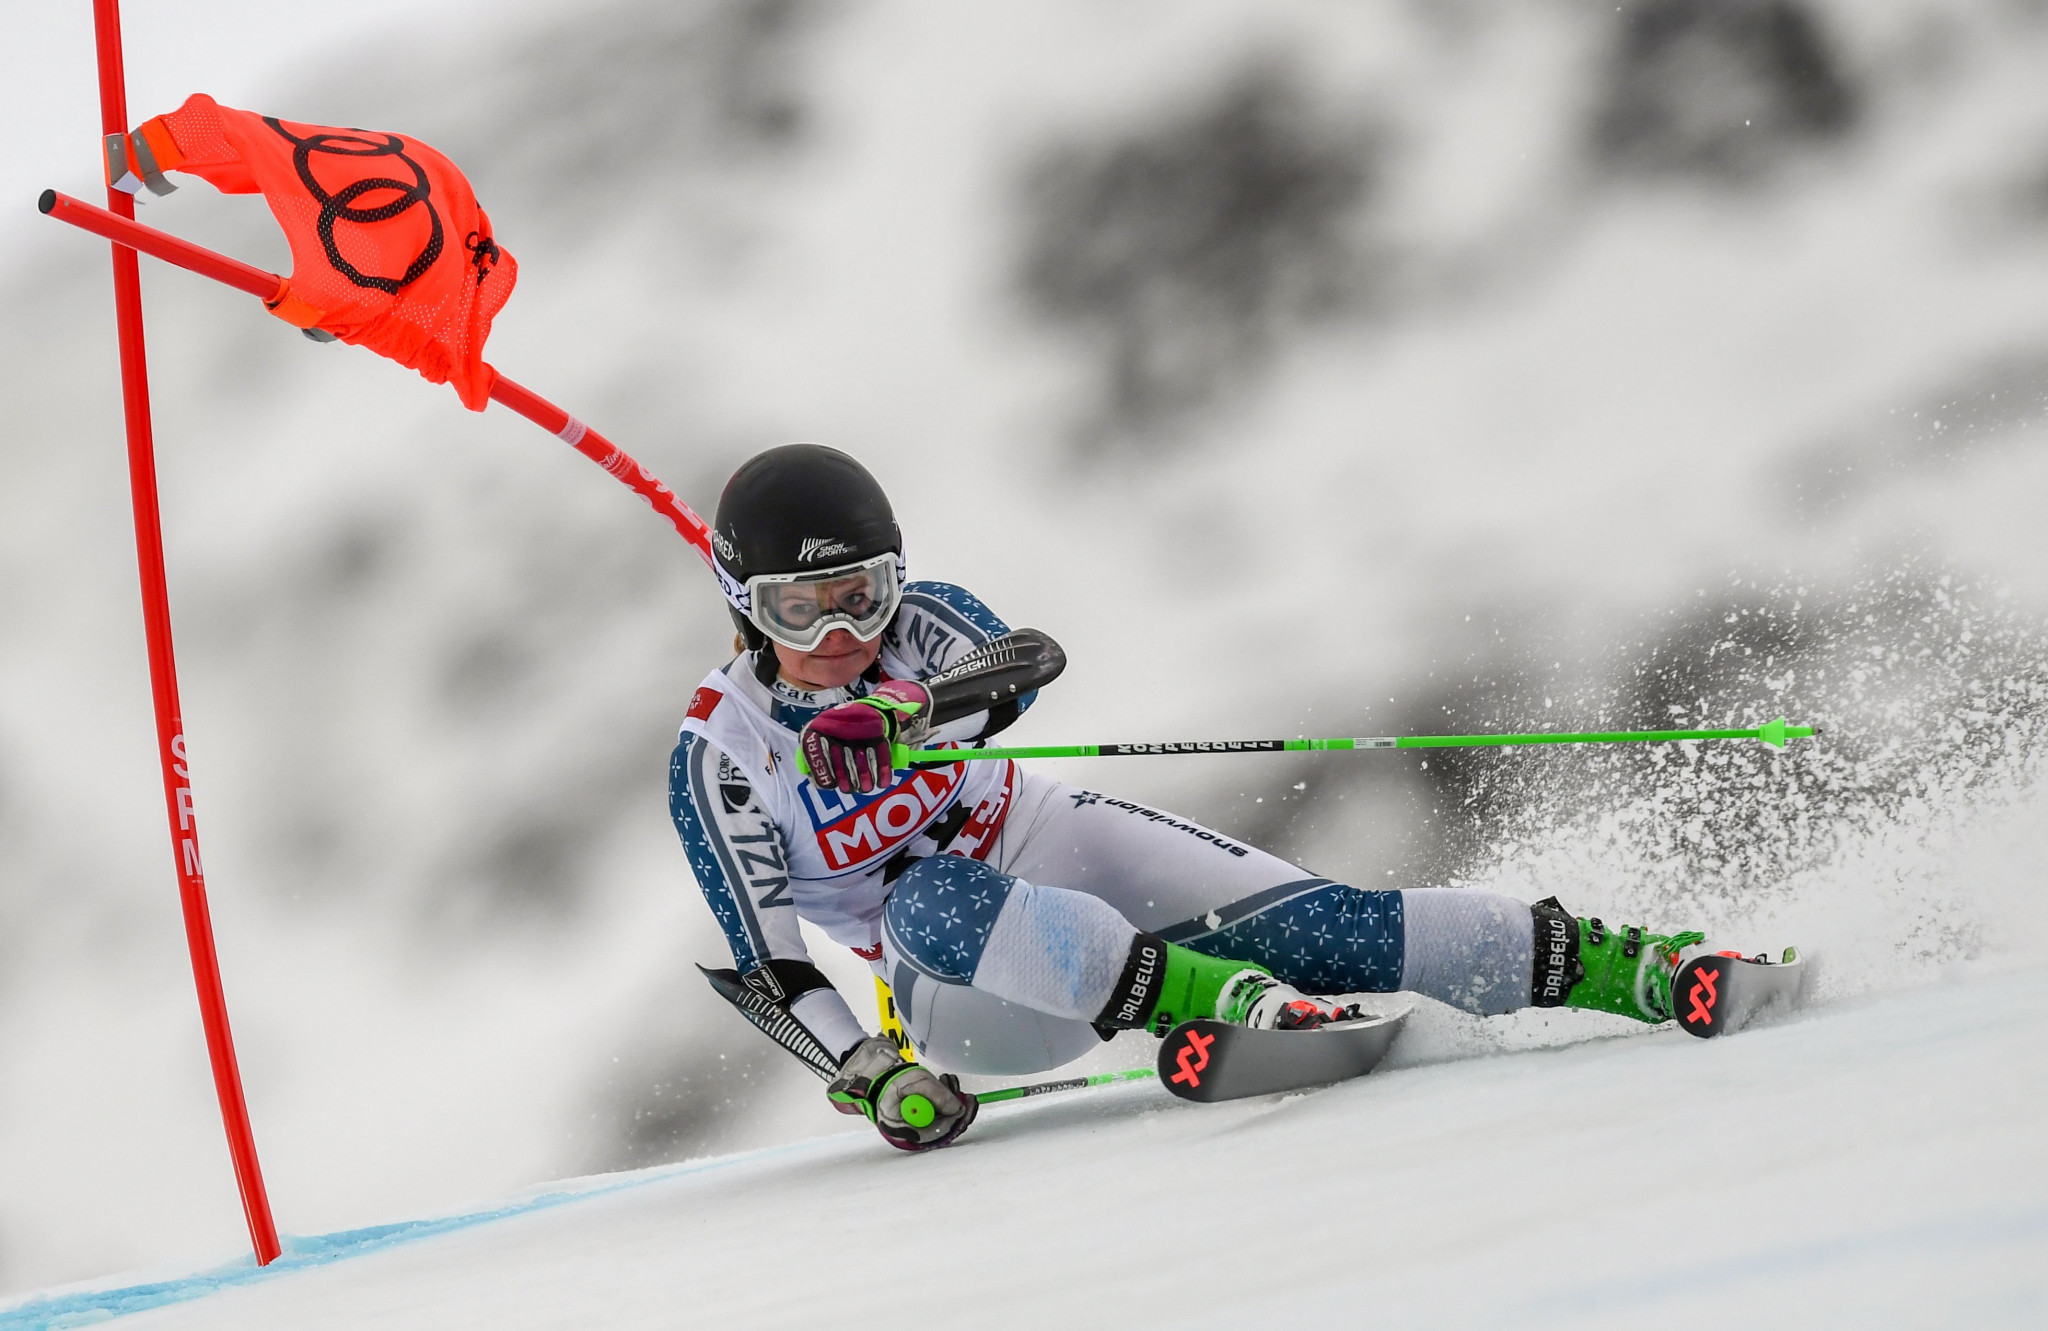 New Zealander dominates women's giant slalom to claim first gold of 2019 World Junior Alpine Skiing Championships